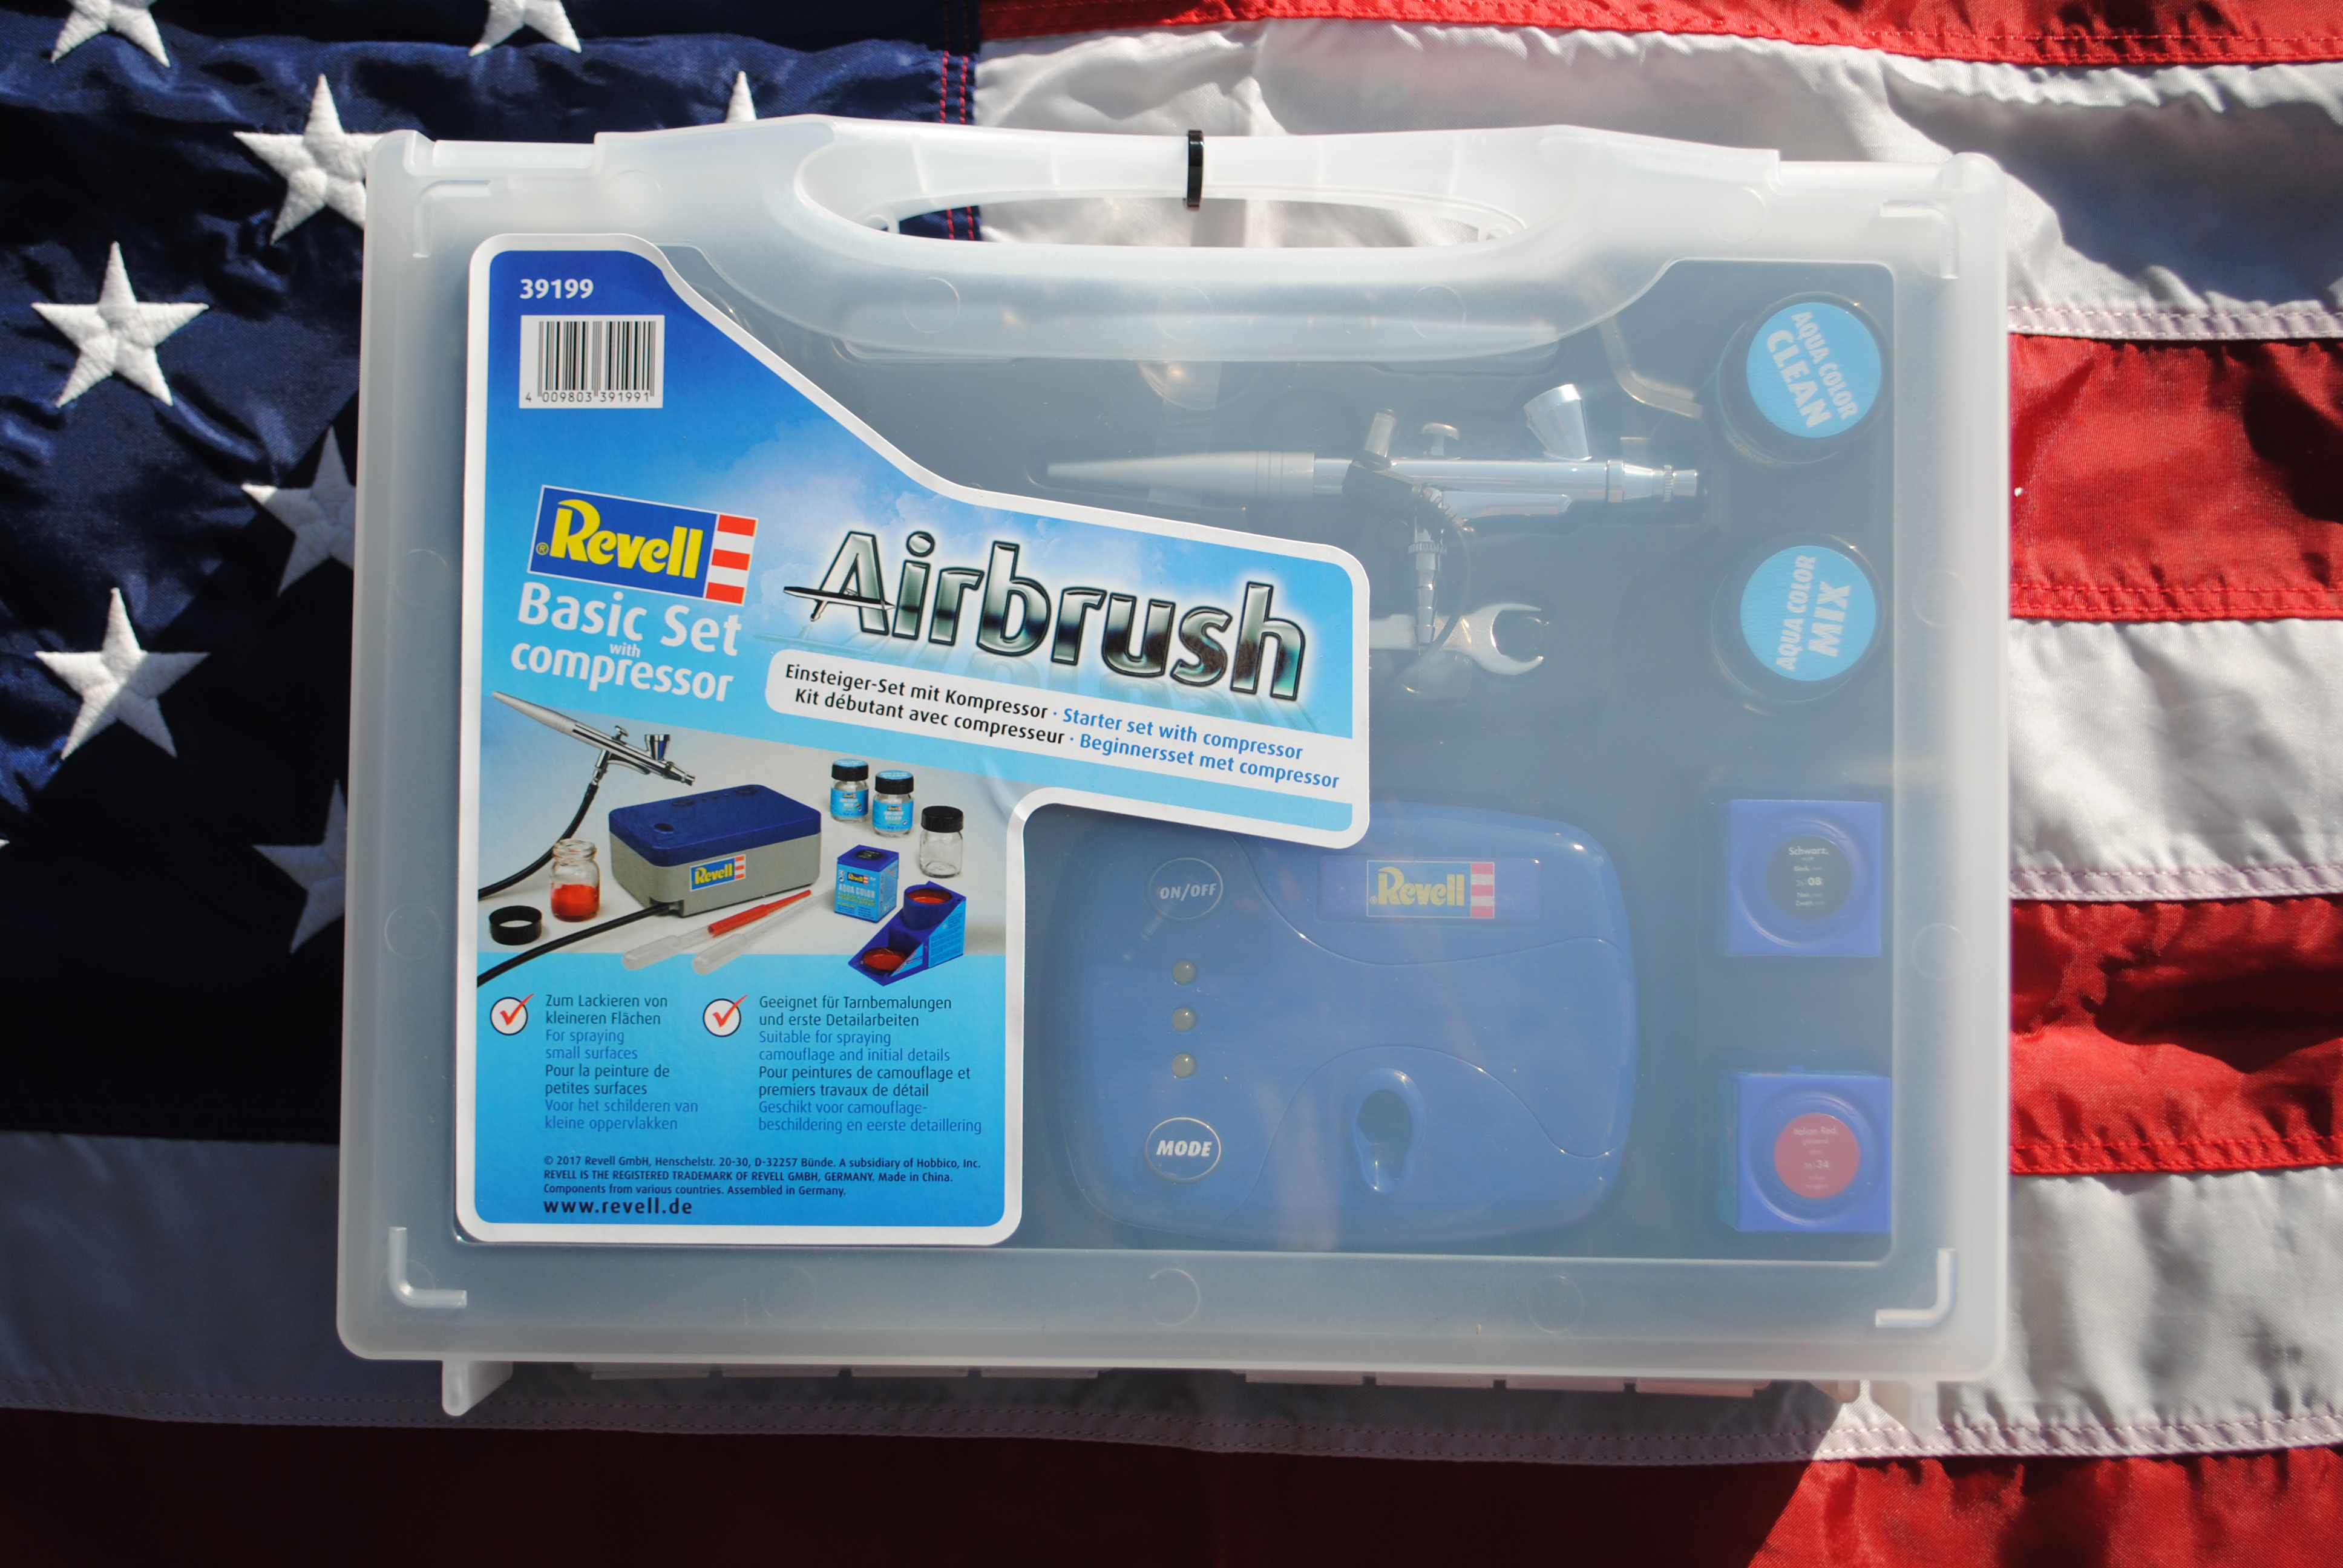 39199 Revell Airbrush Basic Set mit Kompressor